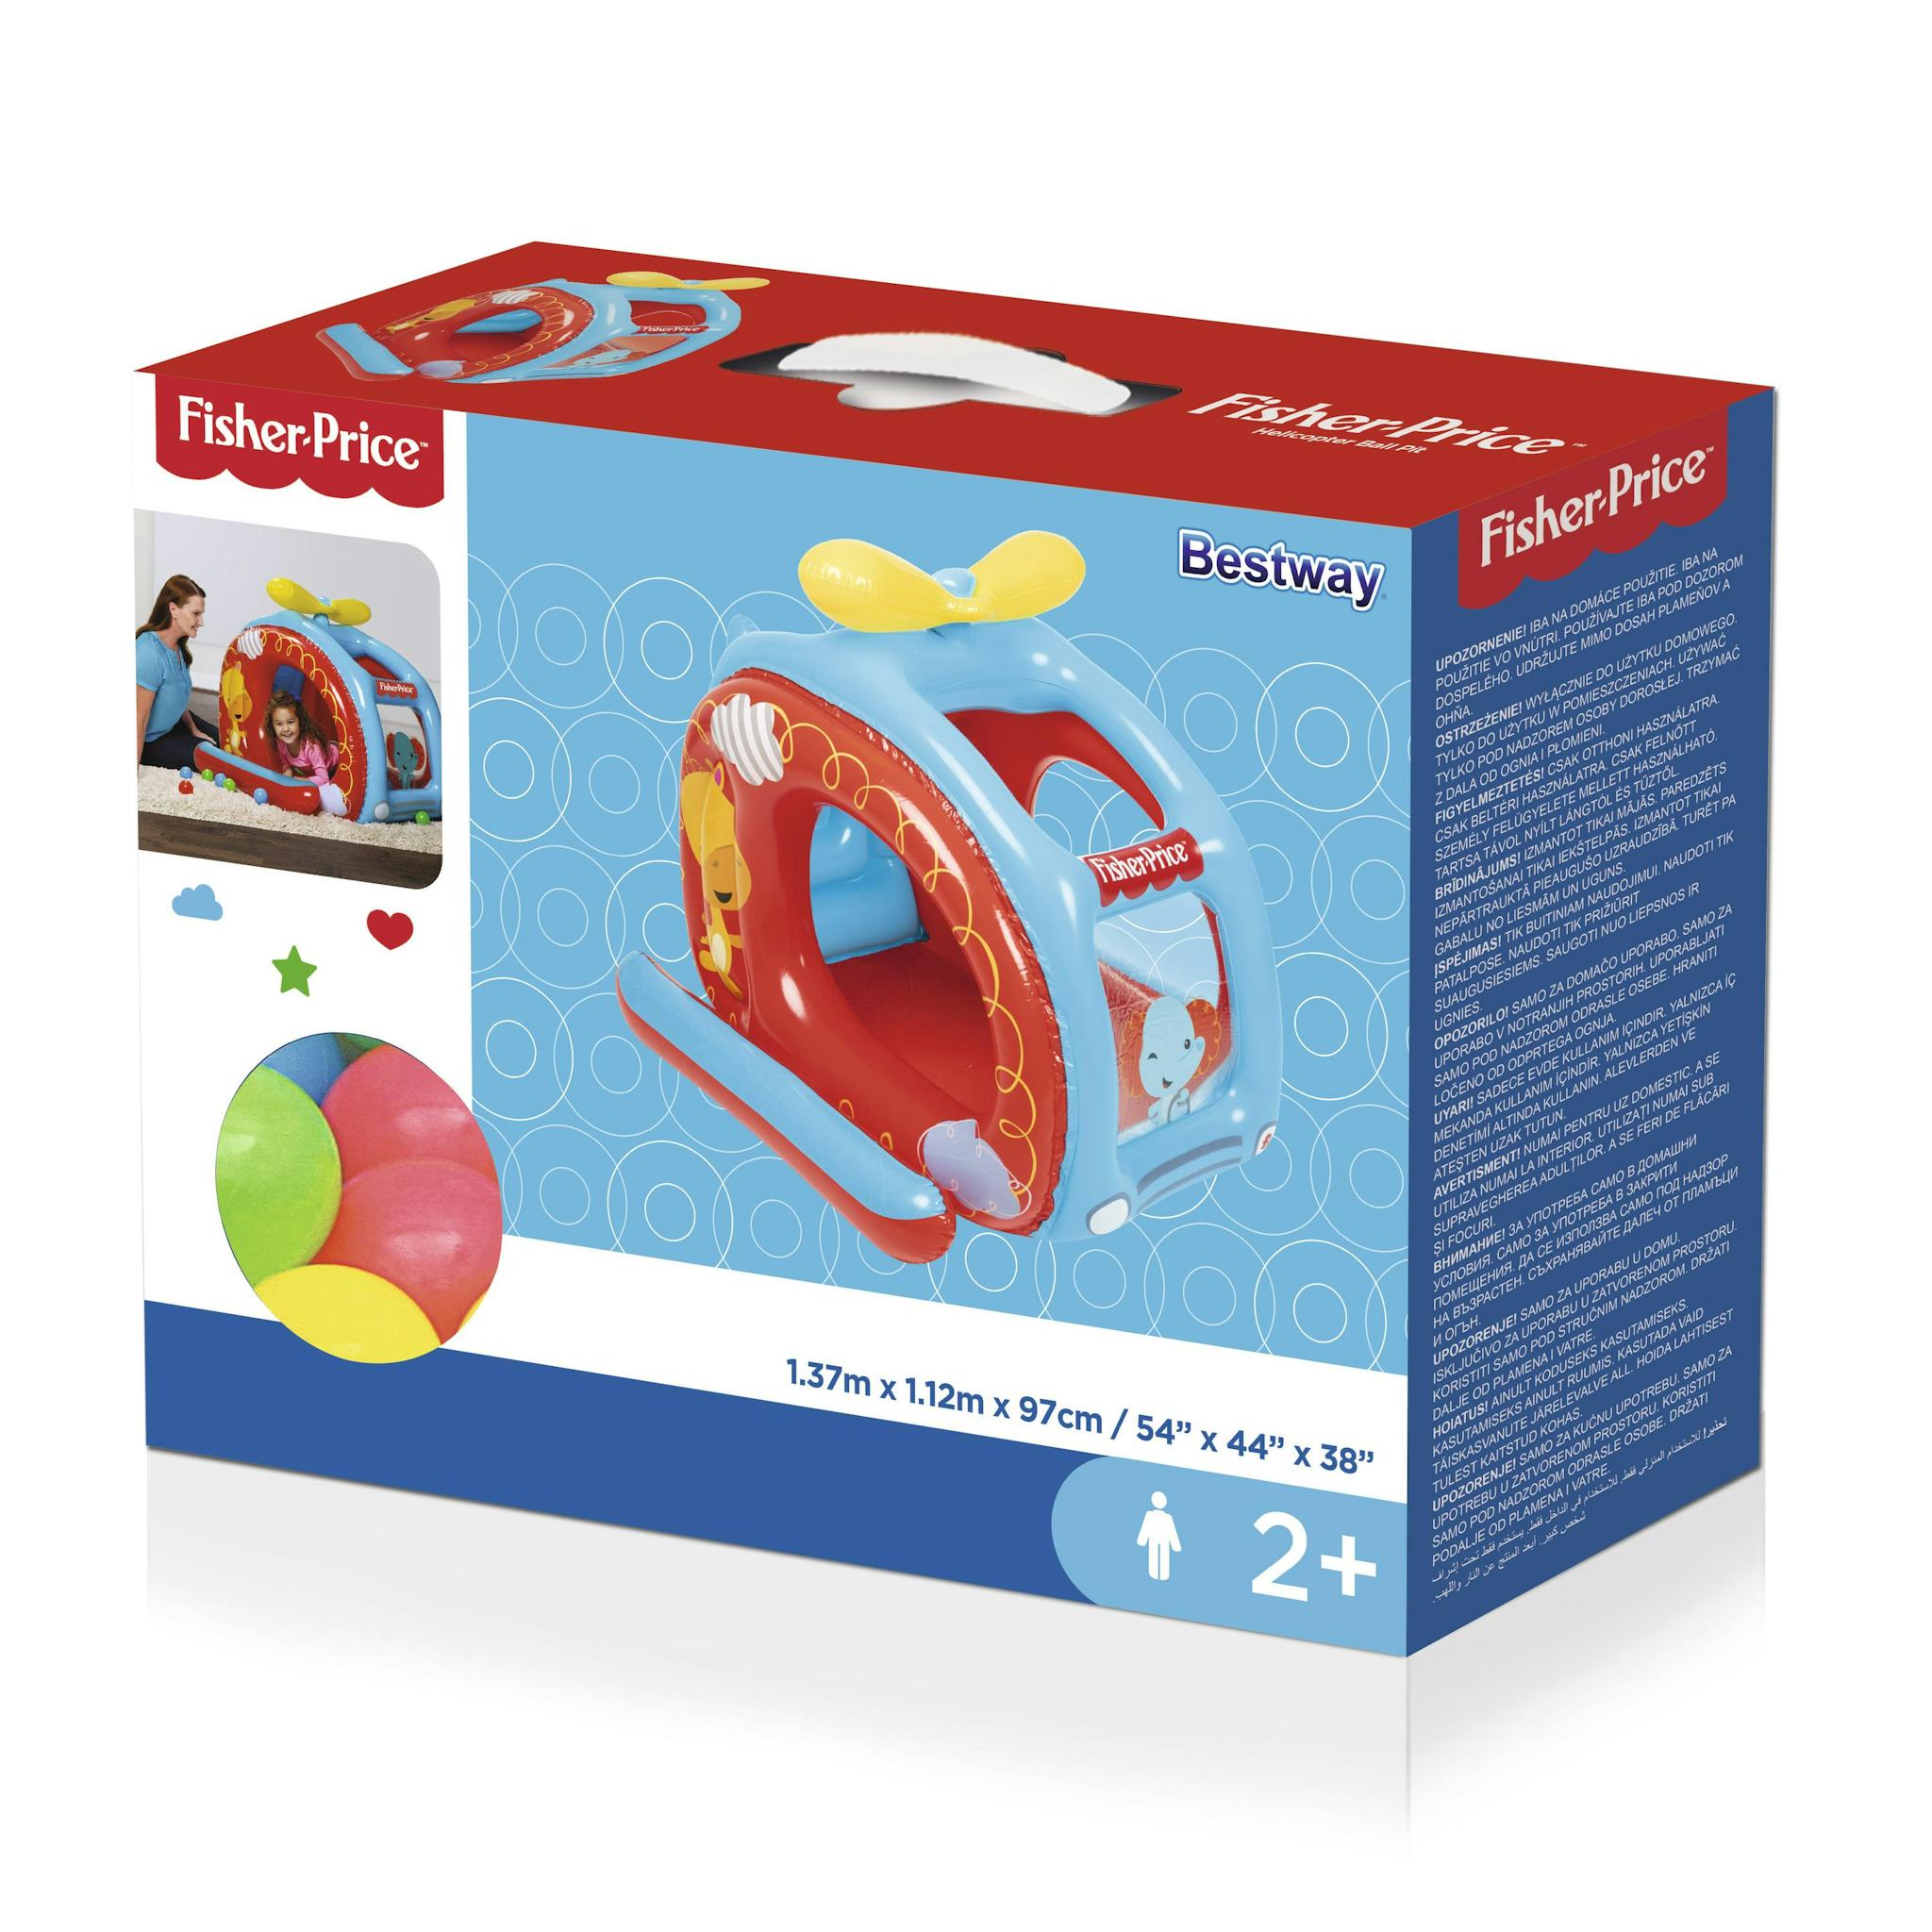 Giochi gonfiabili per bambini Playcenter gonfiabile Elicottero Fisher-Price con palline Bestway 30